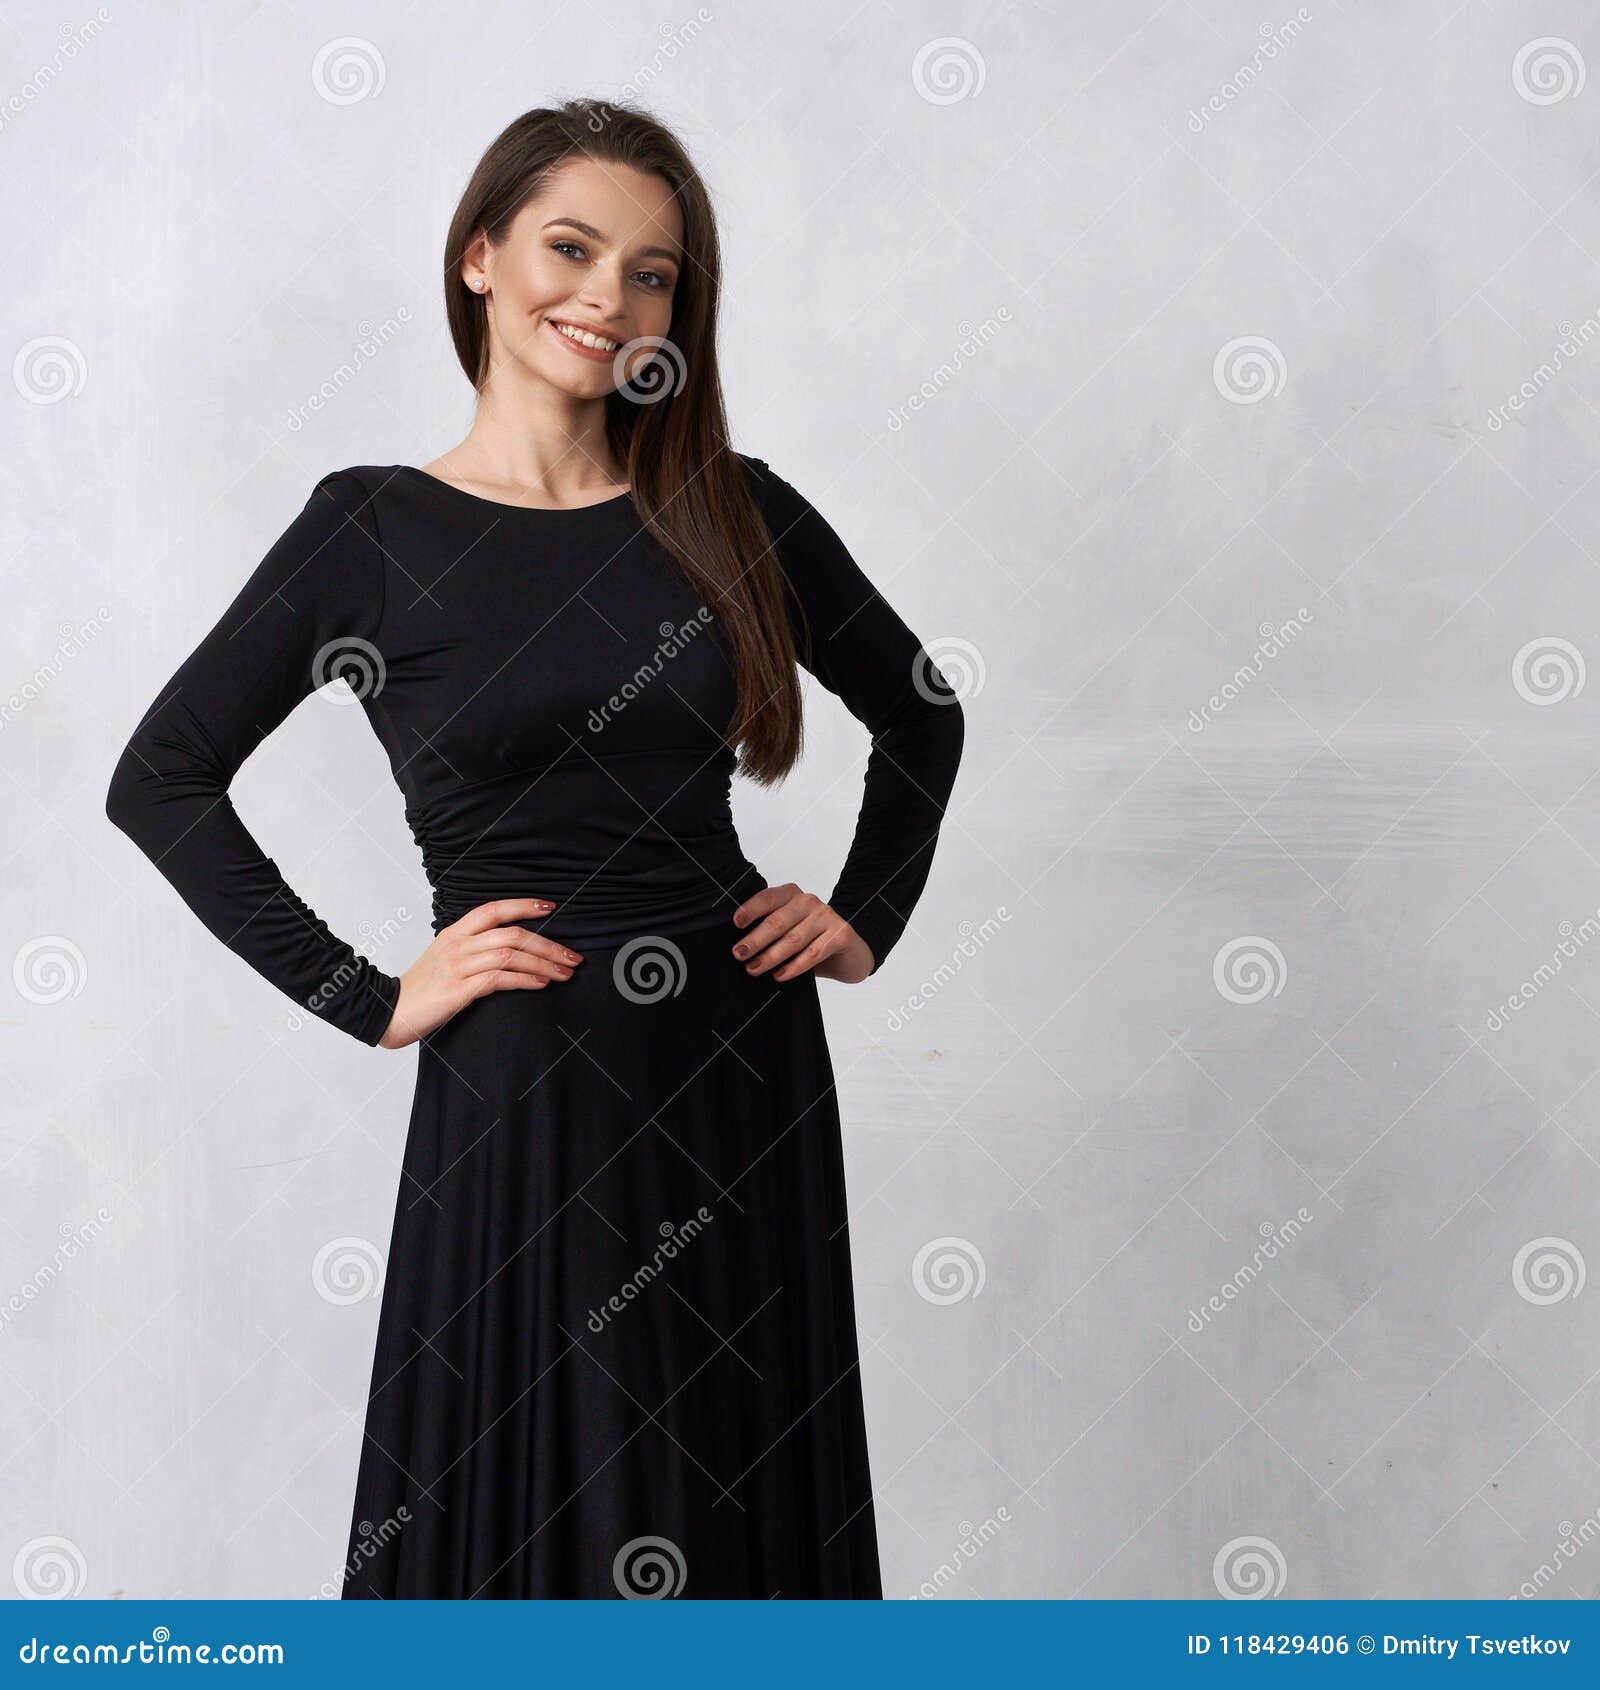 glamour girl maxi dress in black